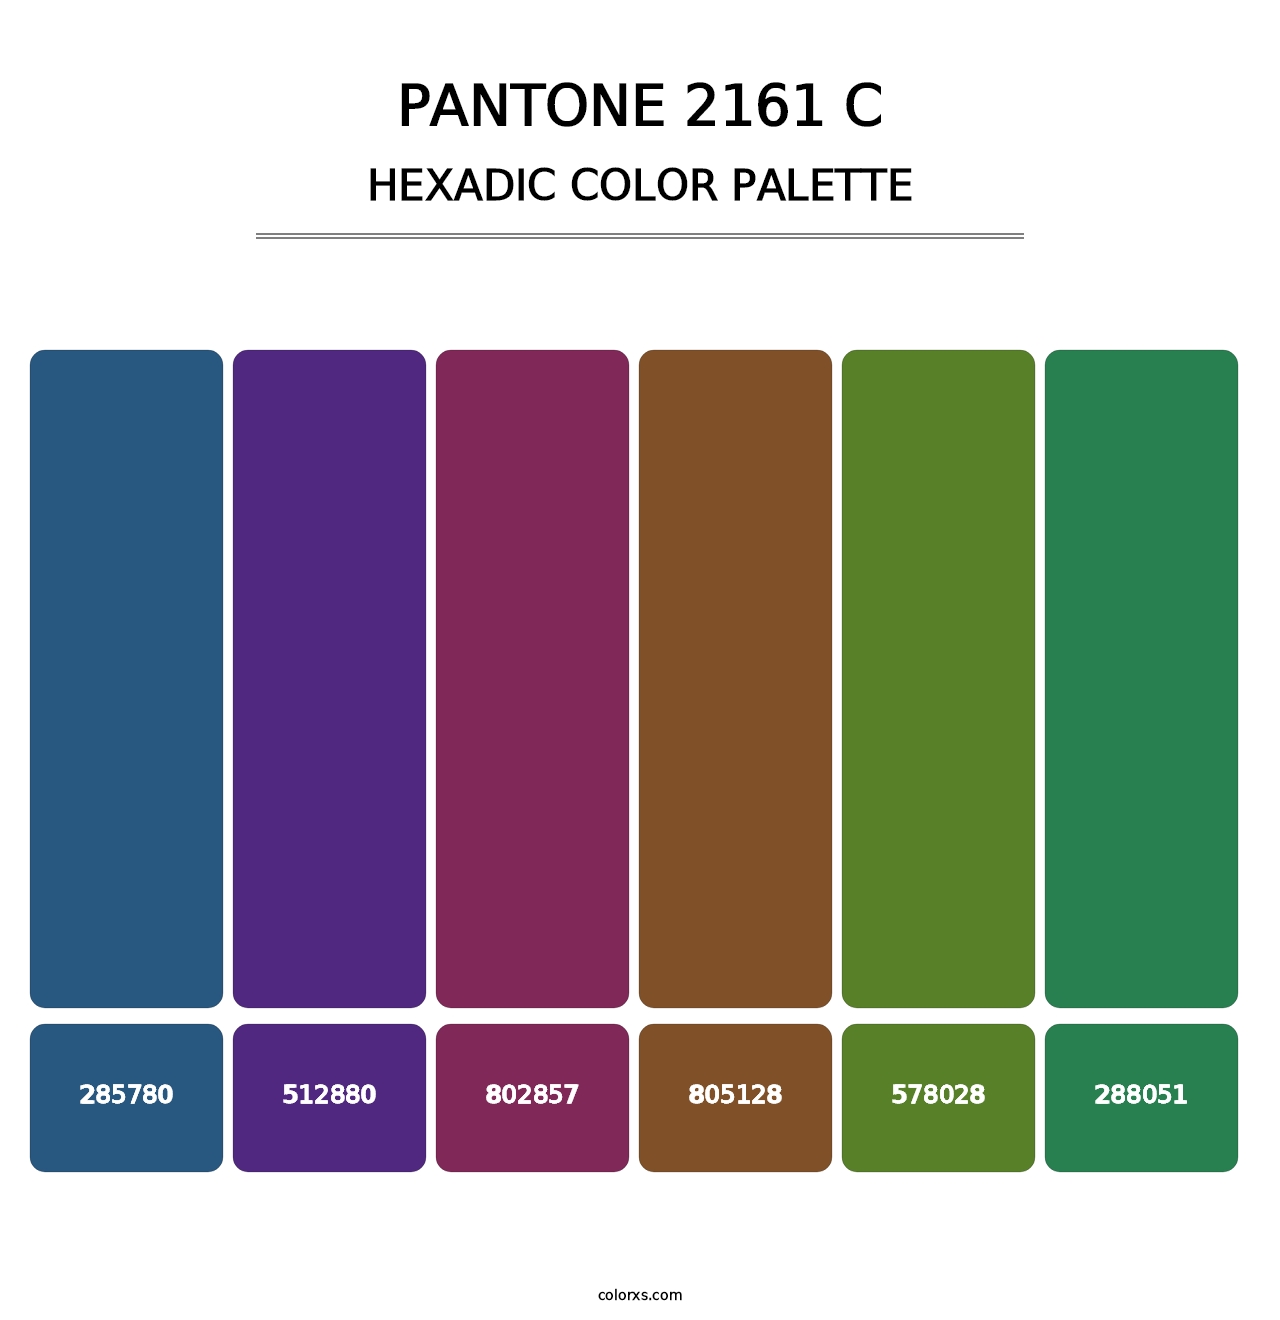 PANTONE 2161 C - Hexadic Color Palette